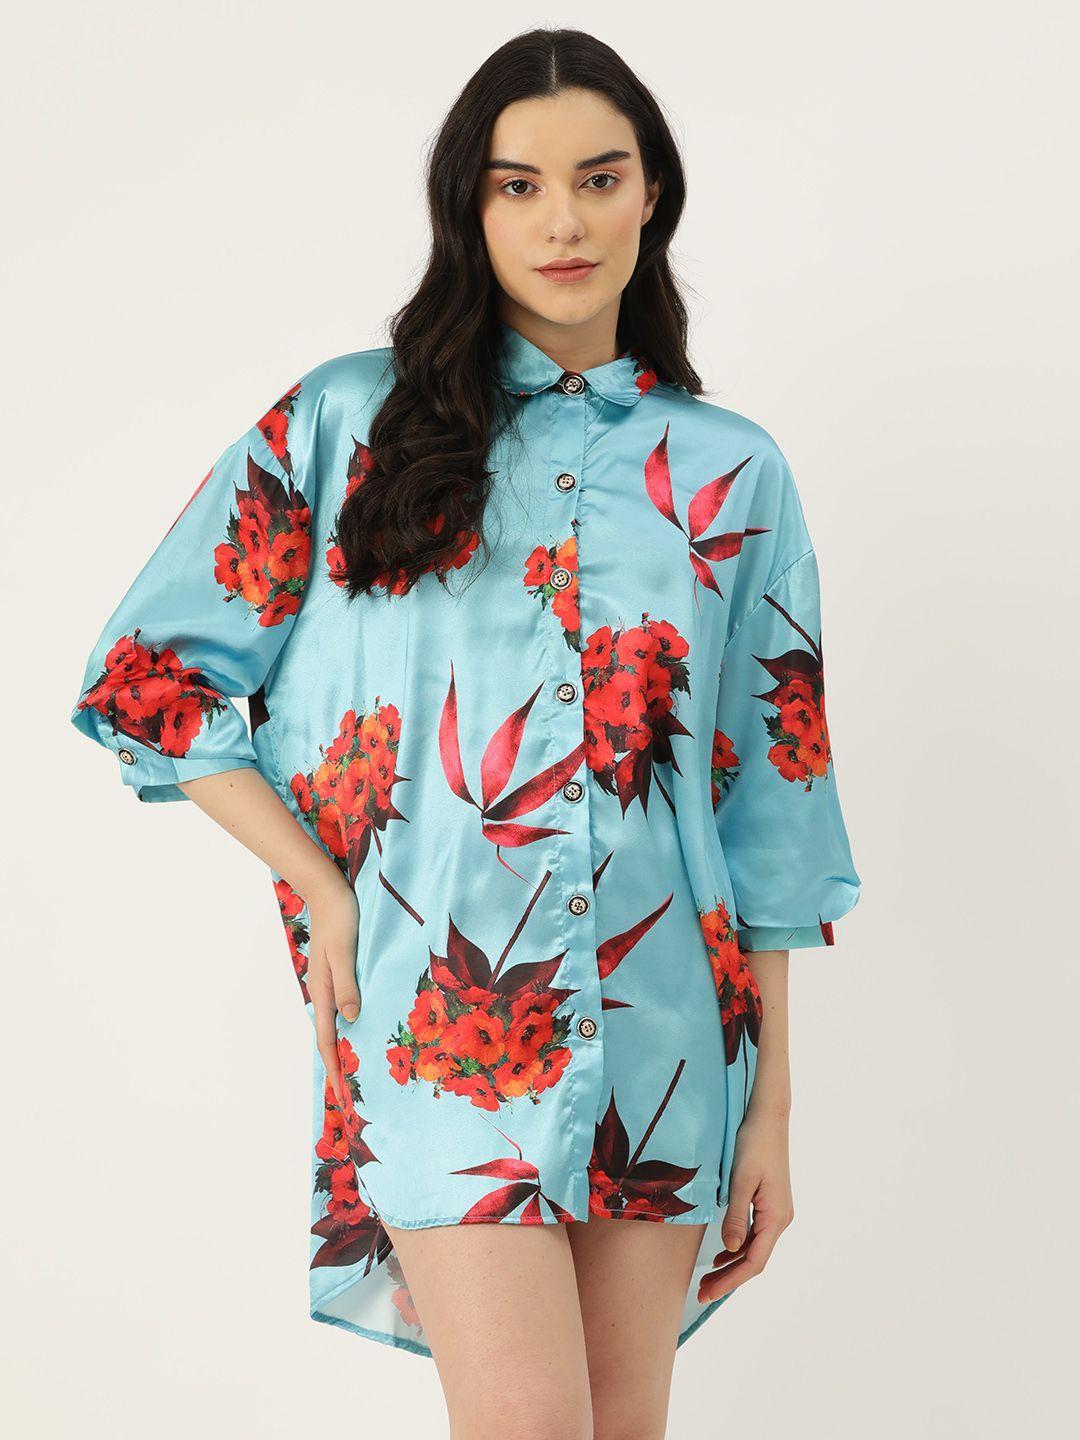 ms.lingies-floral-printed-shirt-nightdress